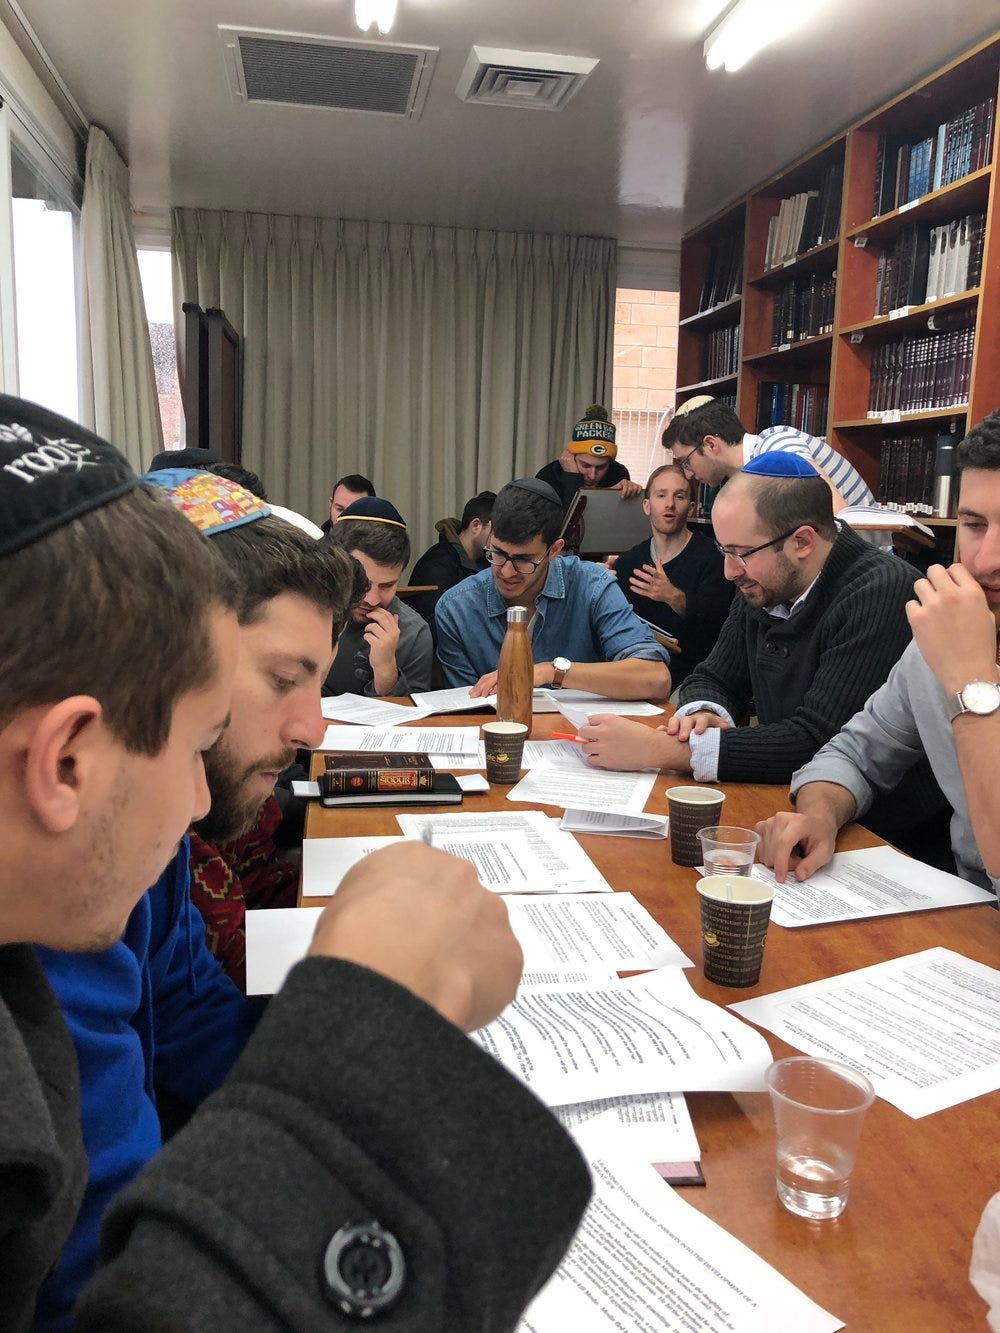 Studying at Machon Yachov Yeshiva